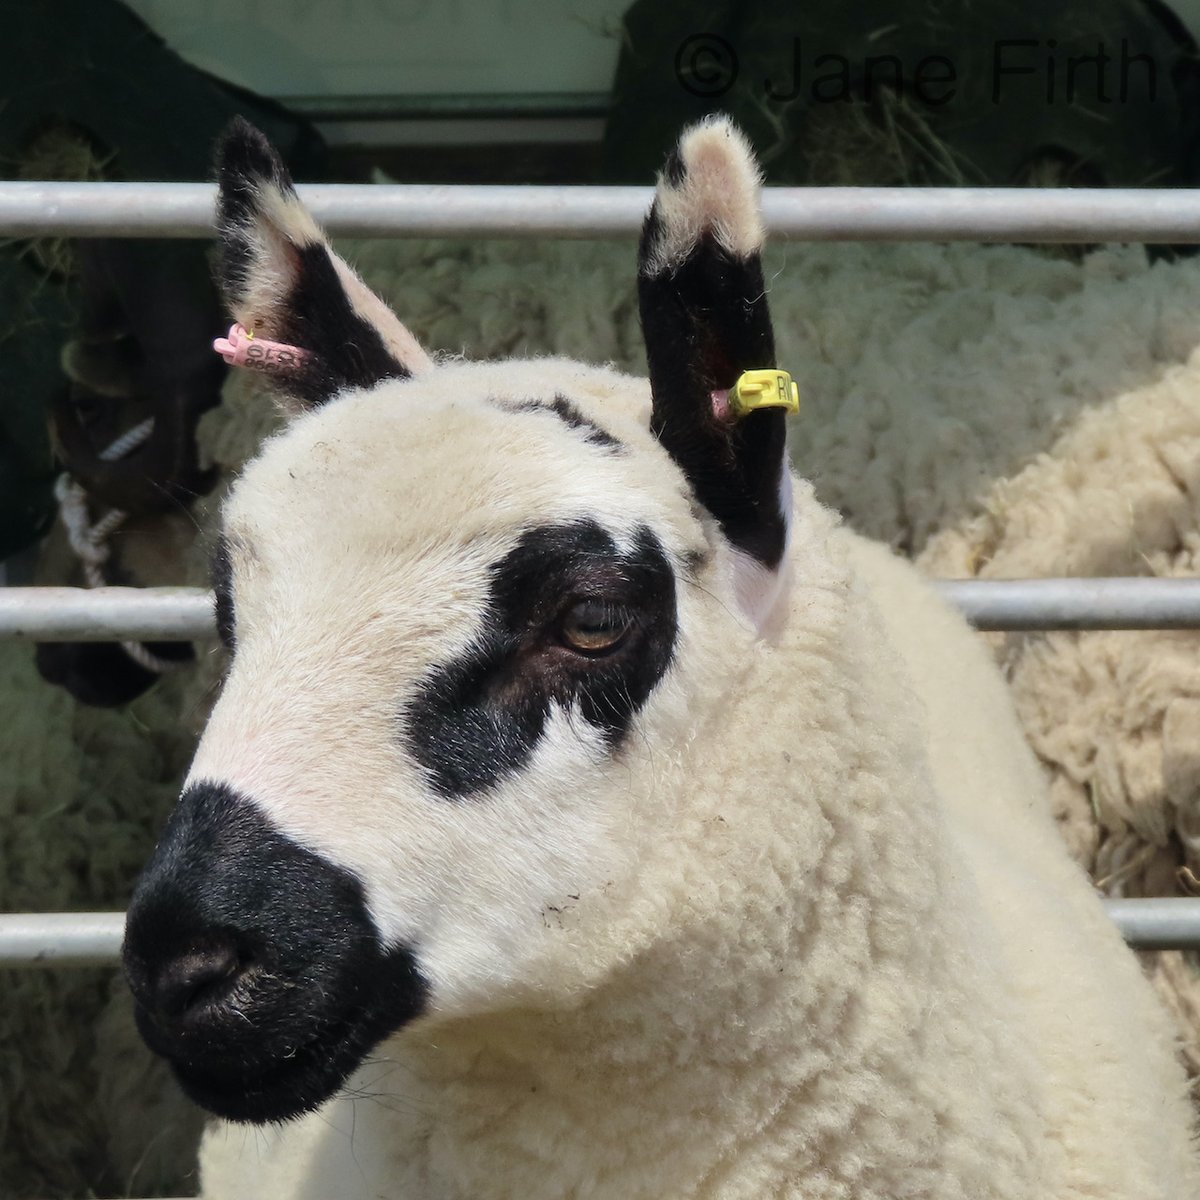 My suggestion for #sheepoftheweek @BritishWoolFarm  is this beautiful #KerryHill lamb photographed at the #Cumberlandshow @BritishWool @UlsterWool #britishnativebreeds